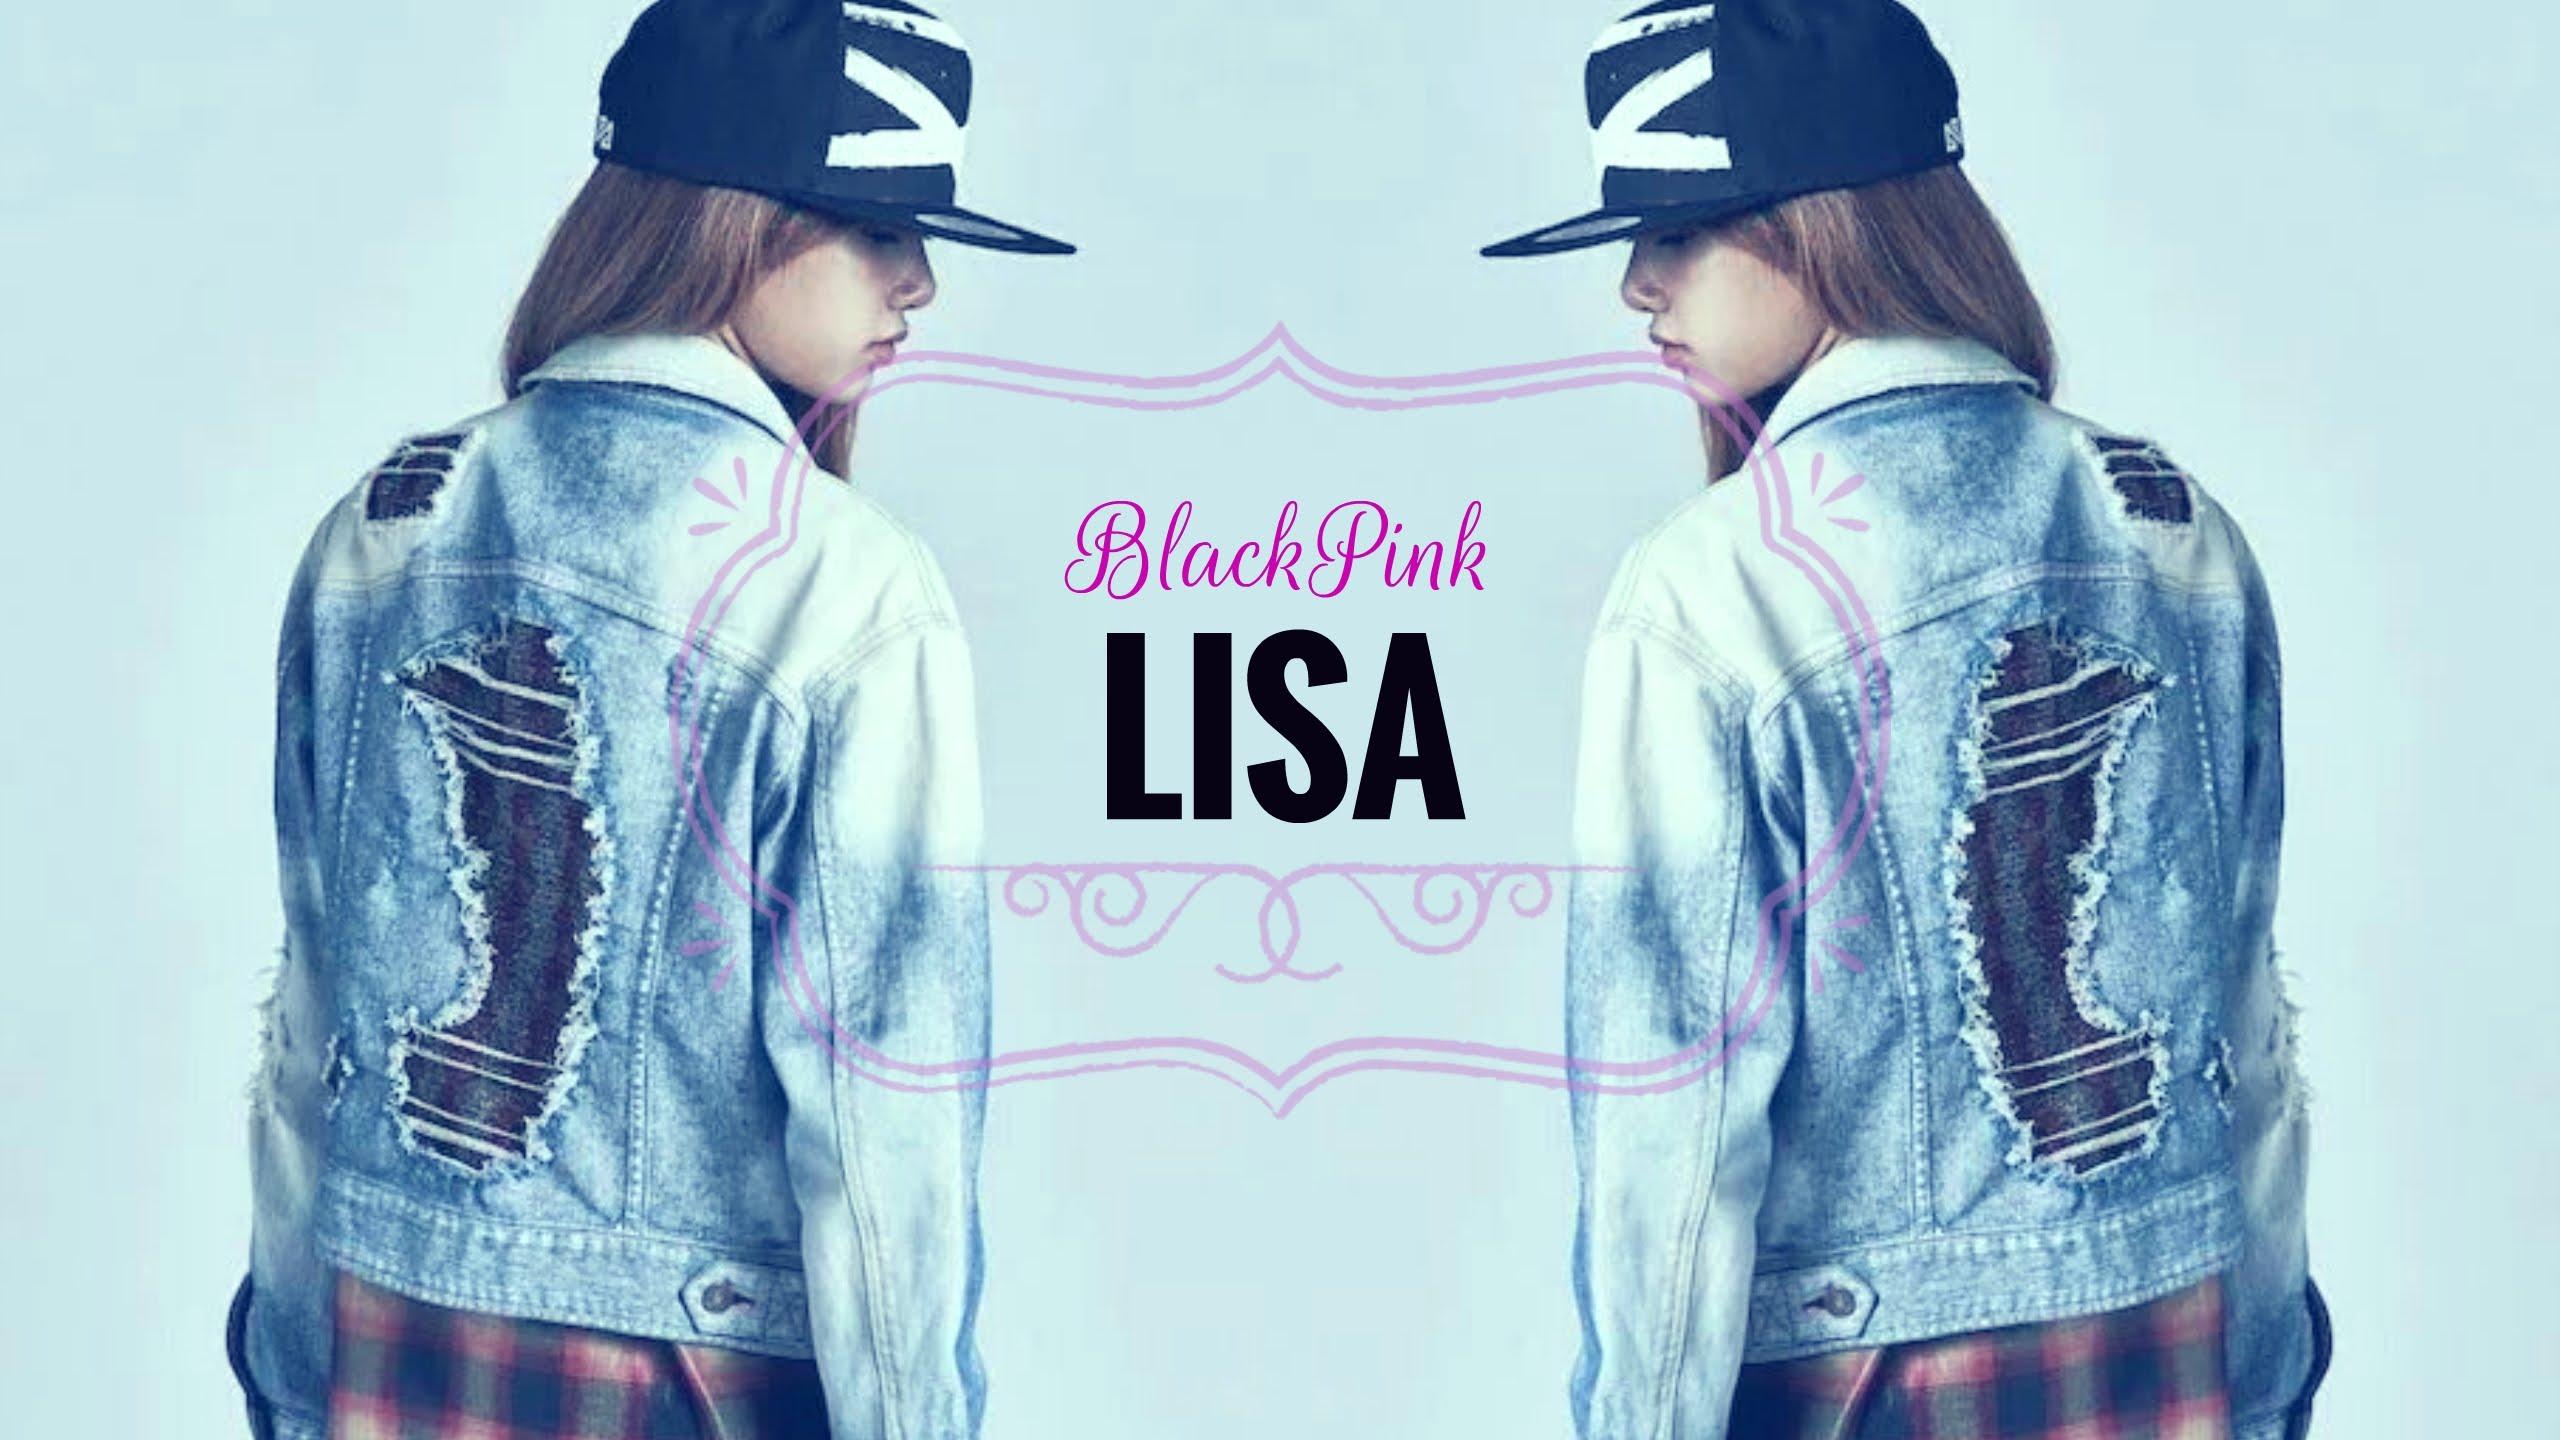 Lisa. BlackPink. YG Entertainment. New Girl Group